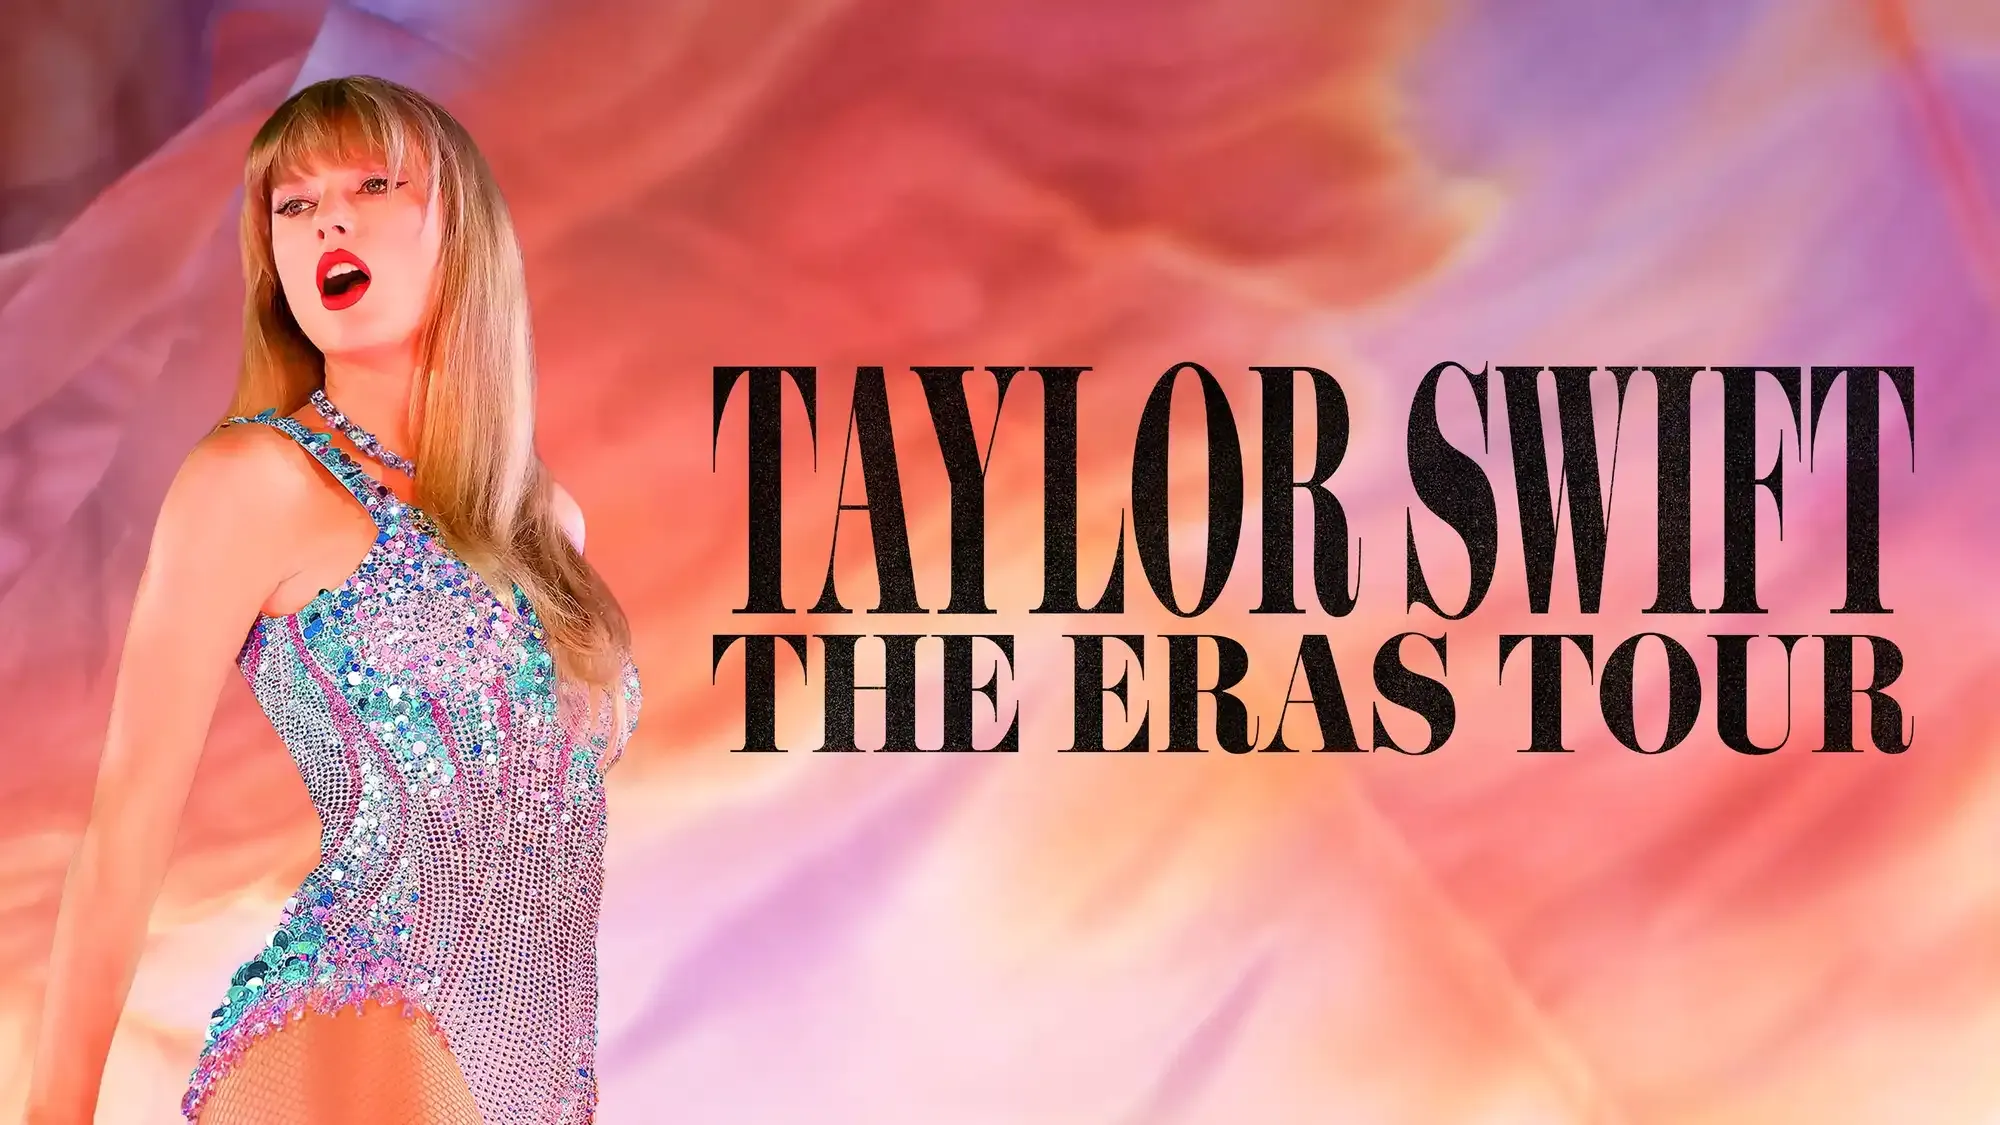 TAYLOR SWIFT | THE ERAS TOUR movie review